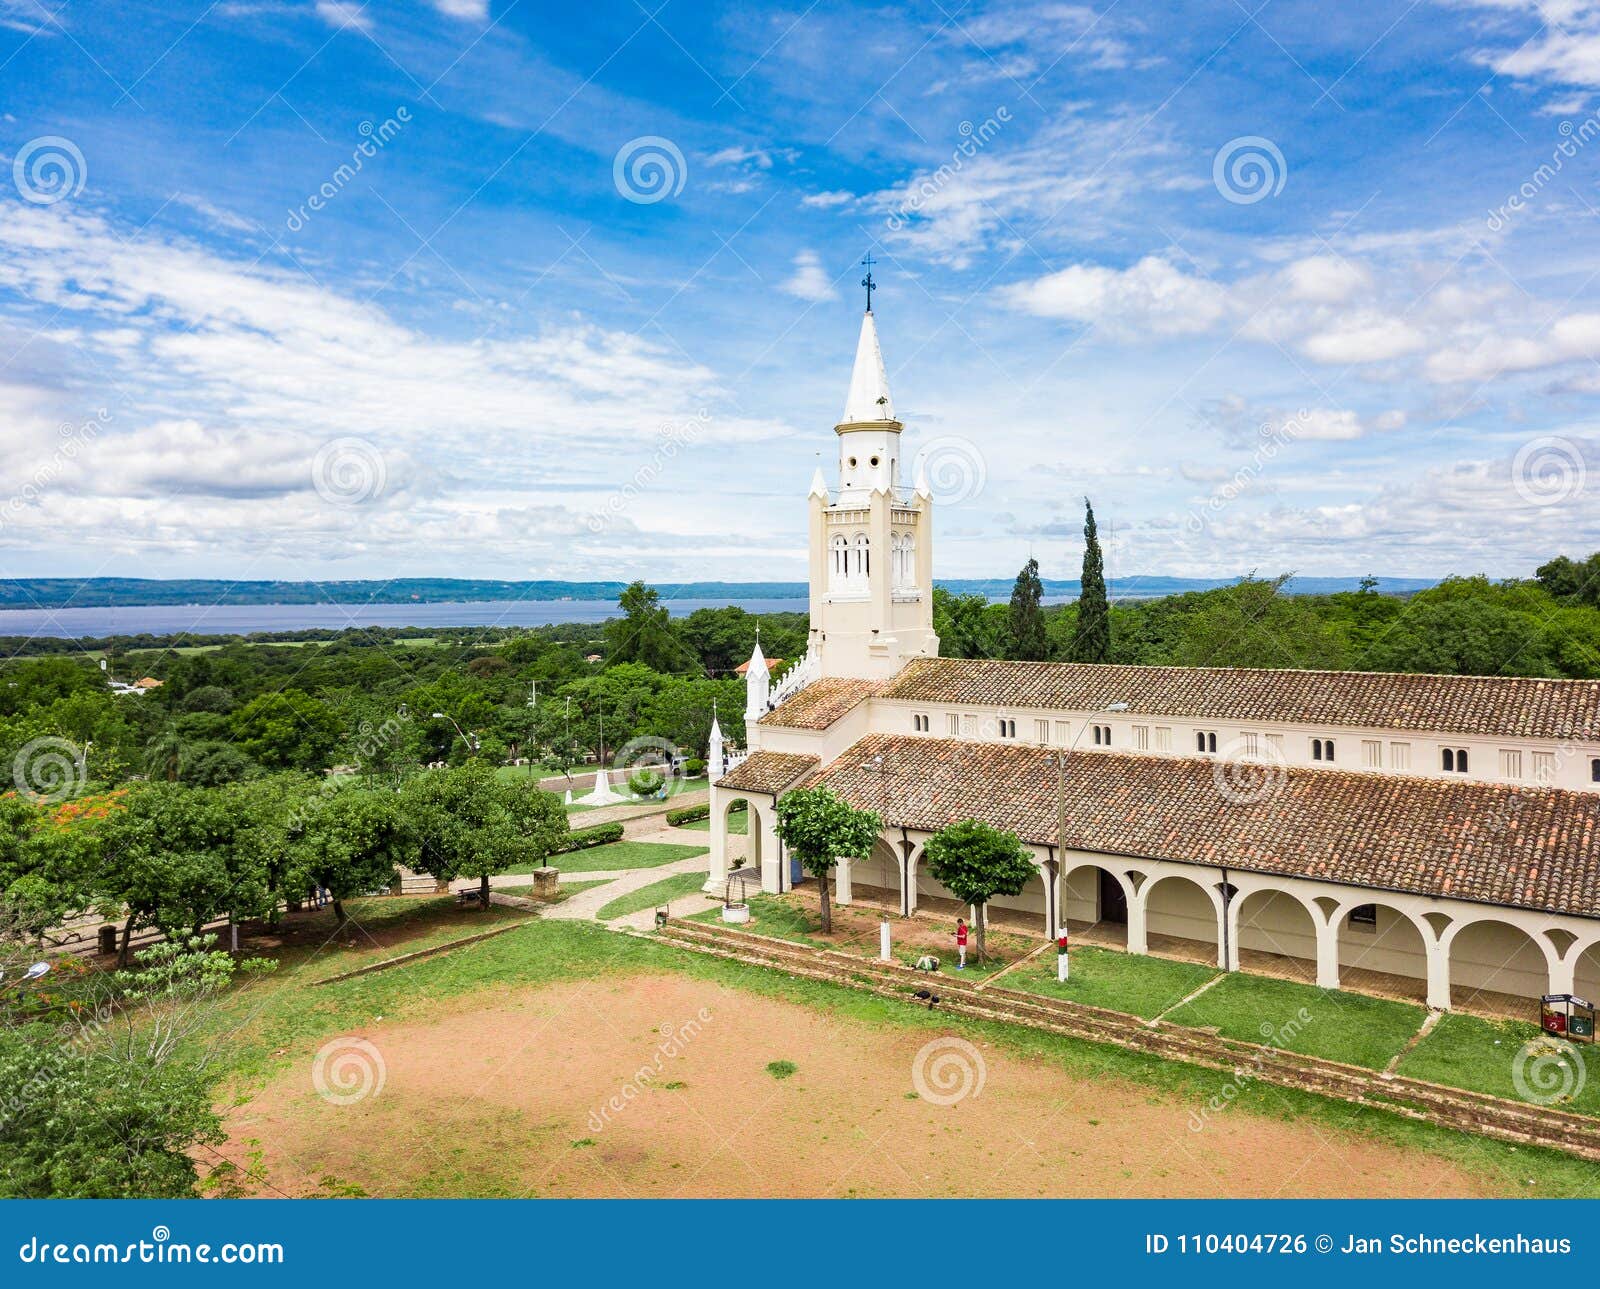 the catholic church `iglesia virgen de la candelaria` of aregua in paraguay overlooking lake ypacarai